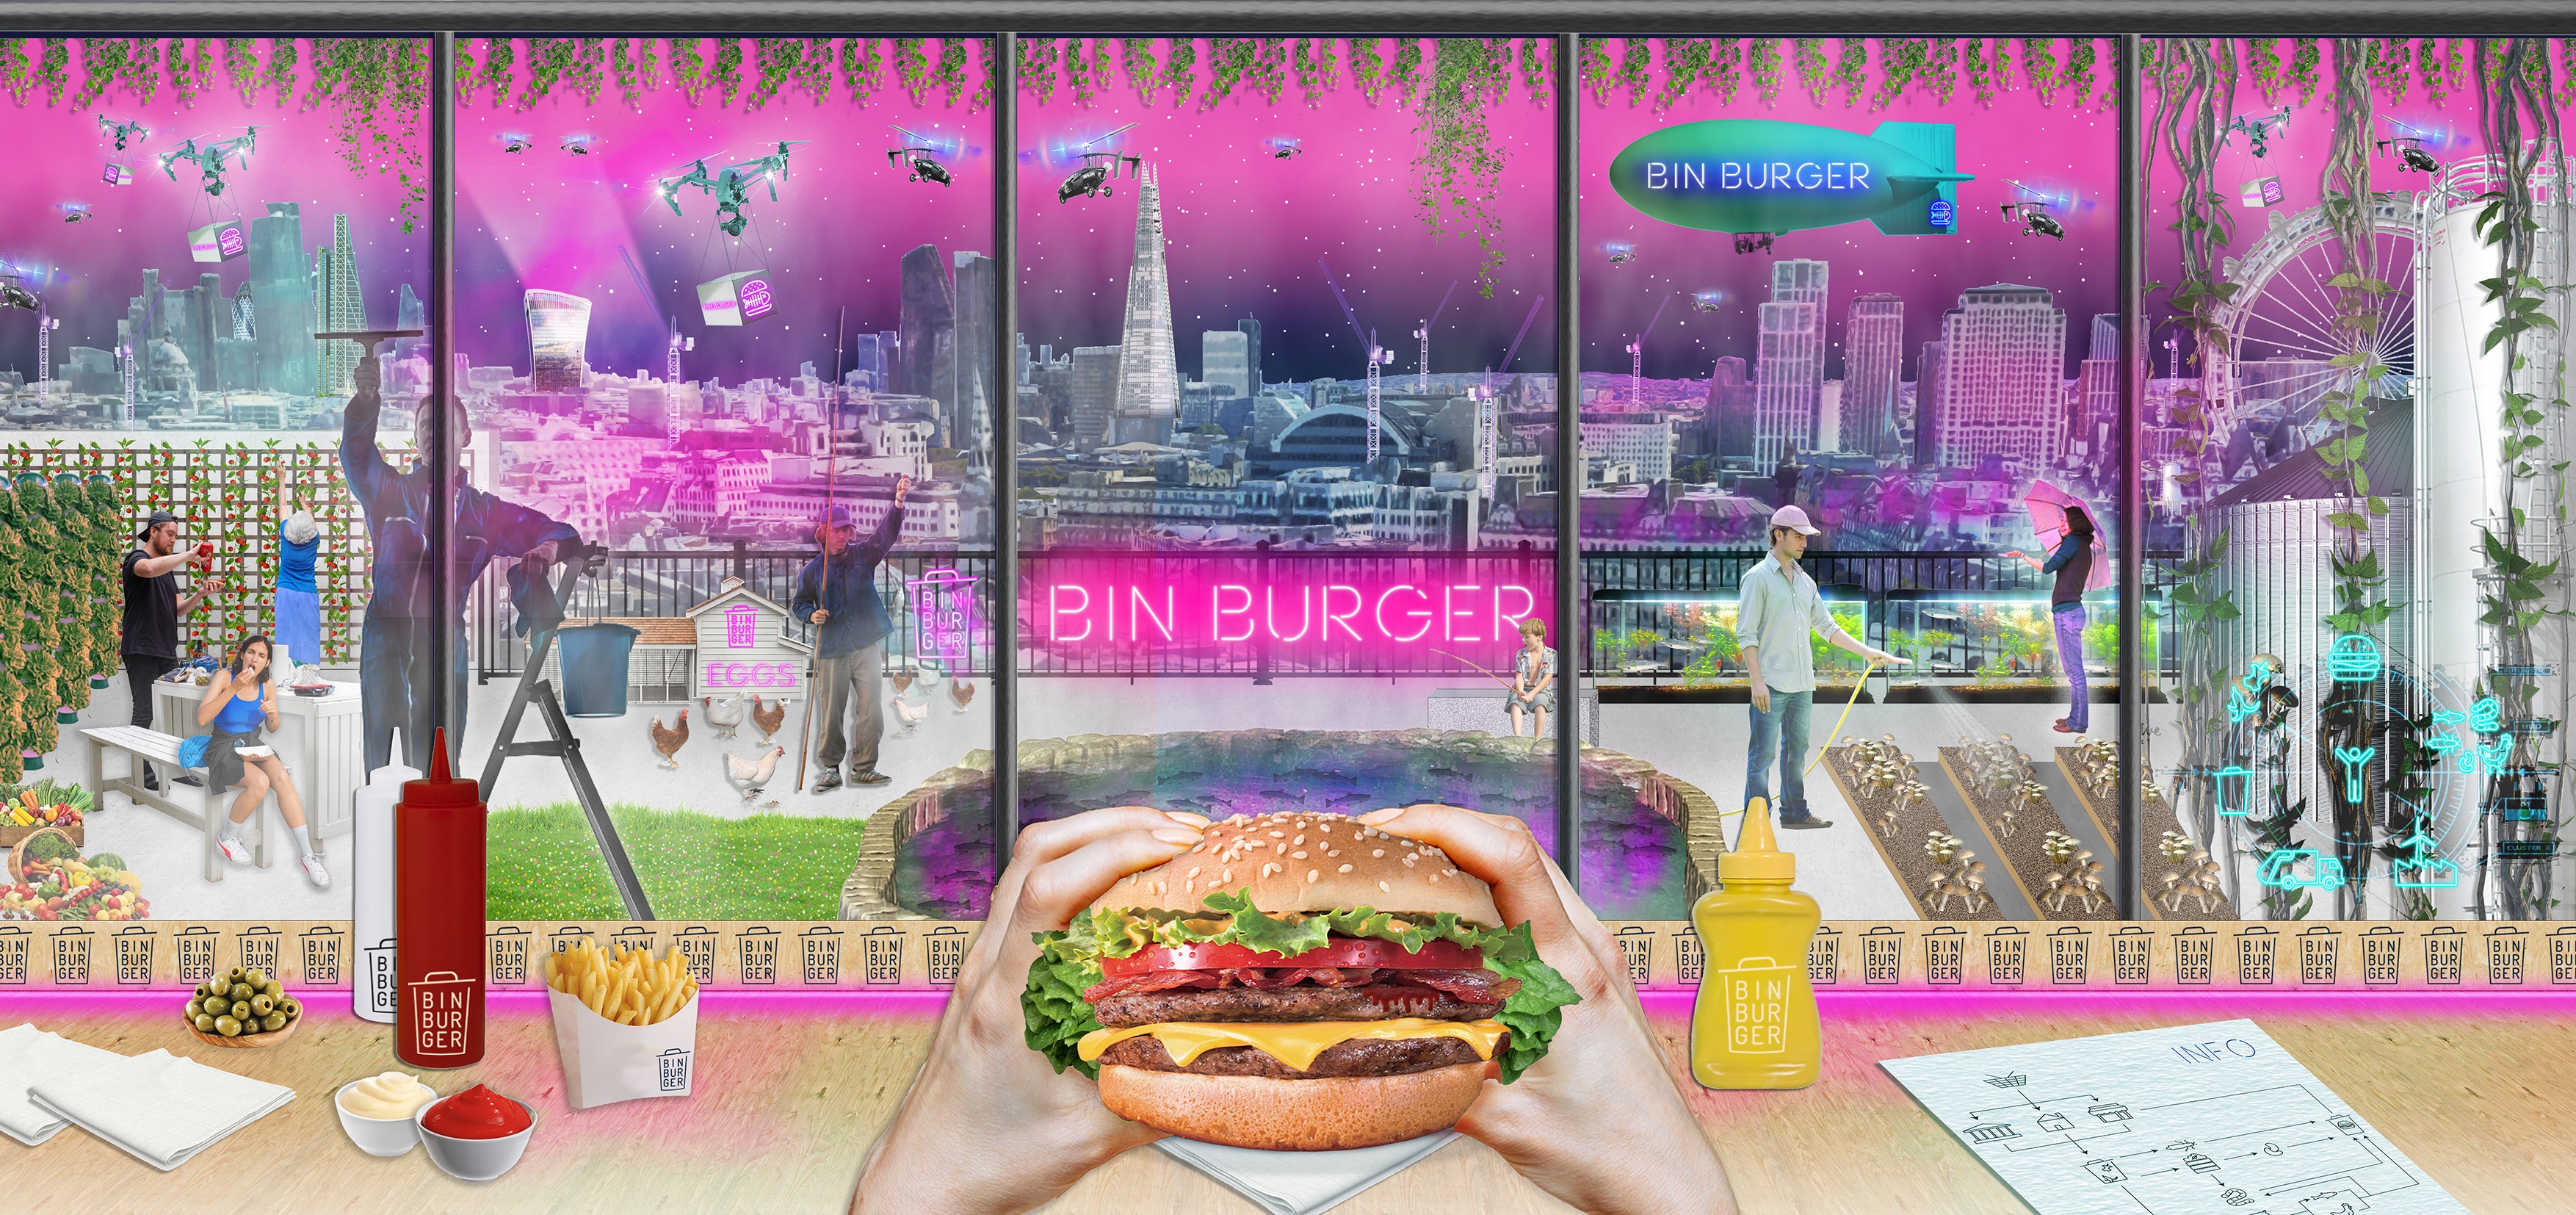 Bin Burger: Turning organic waste into food